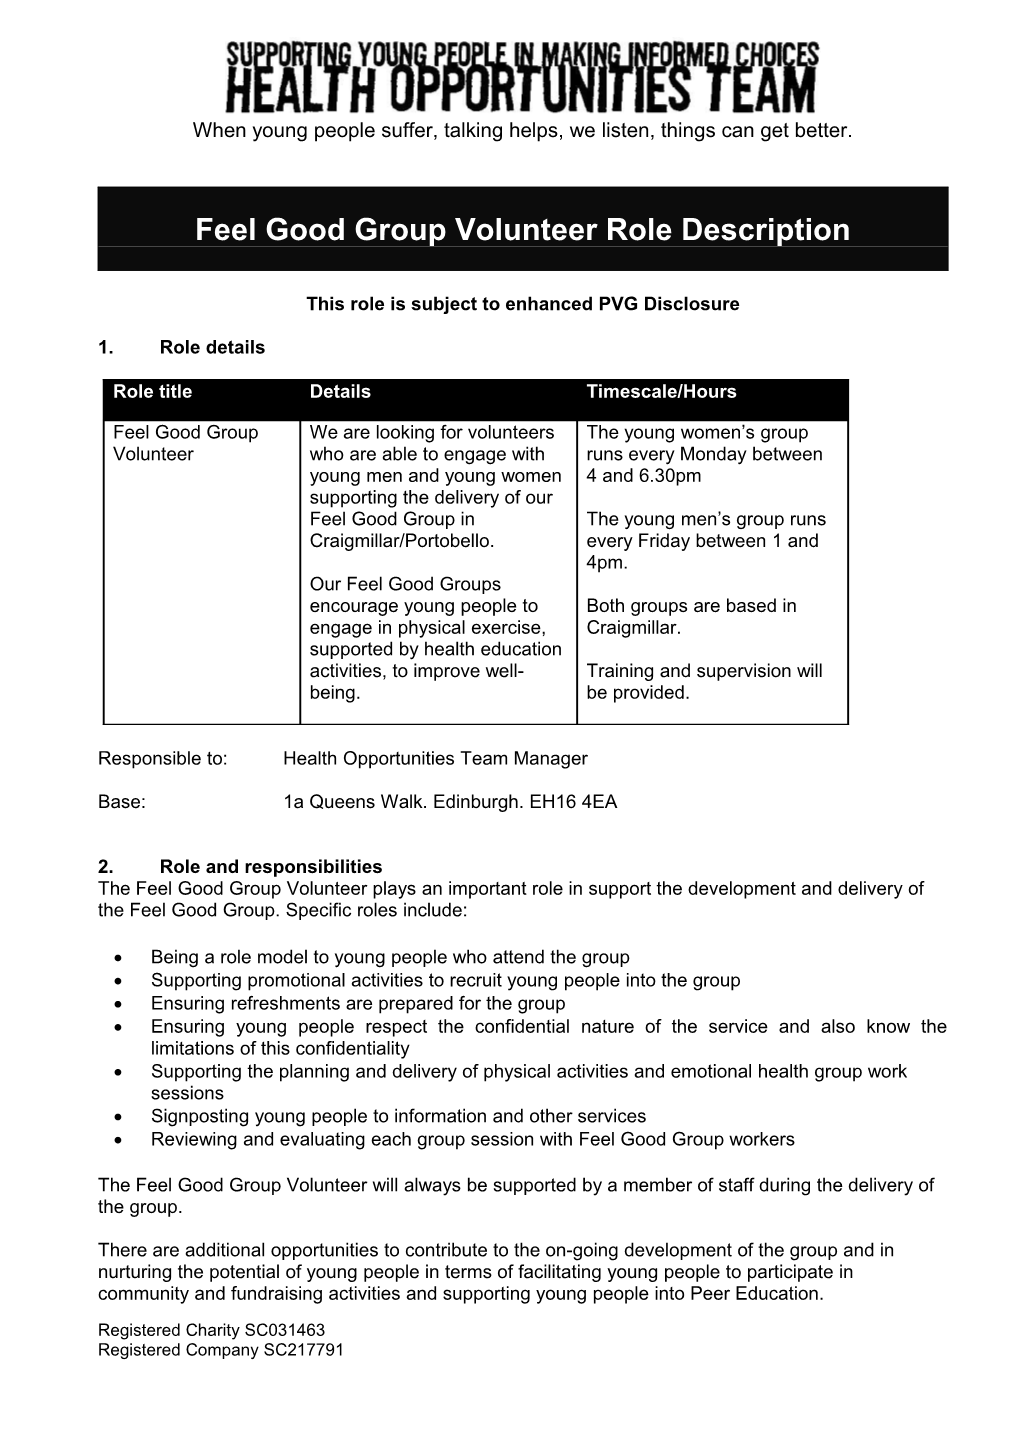 Feel Good Group Volunteer Role Description